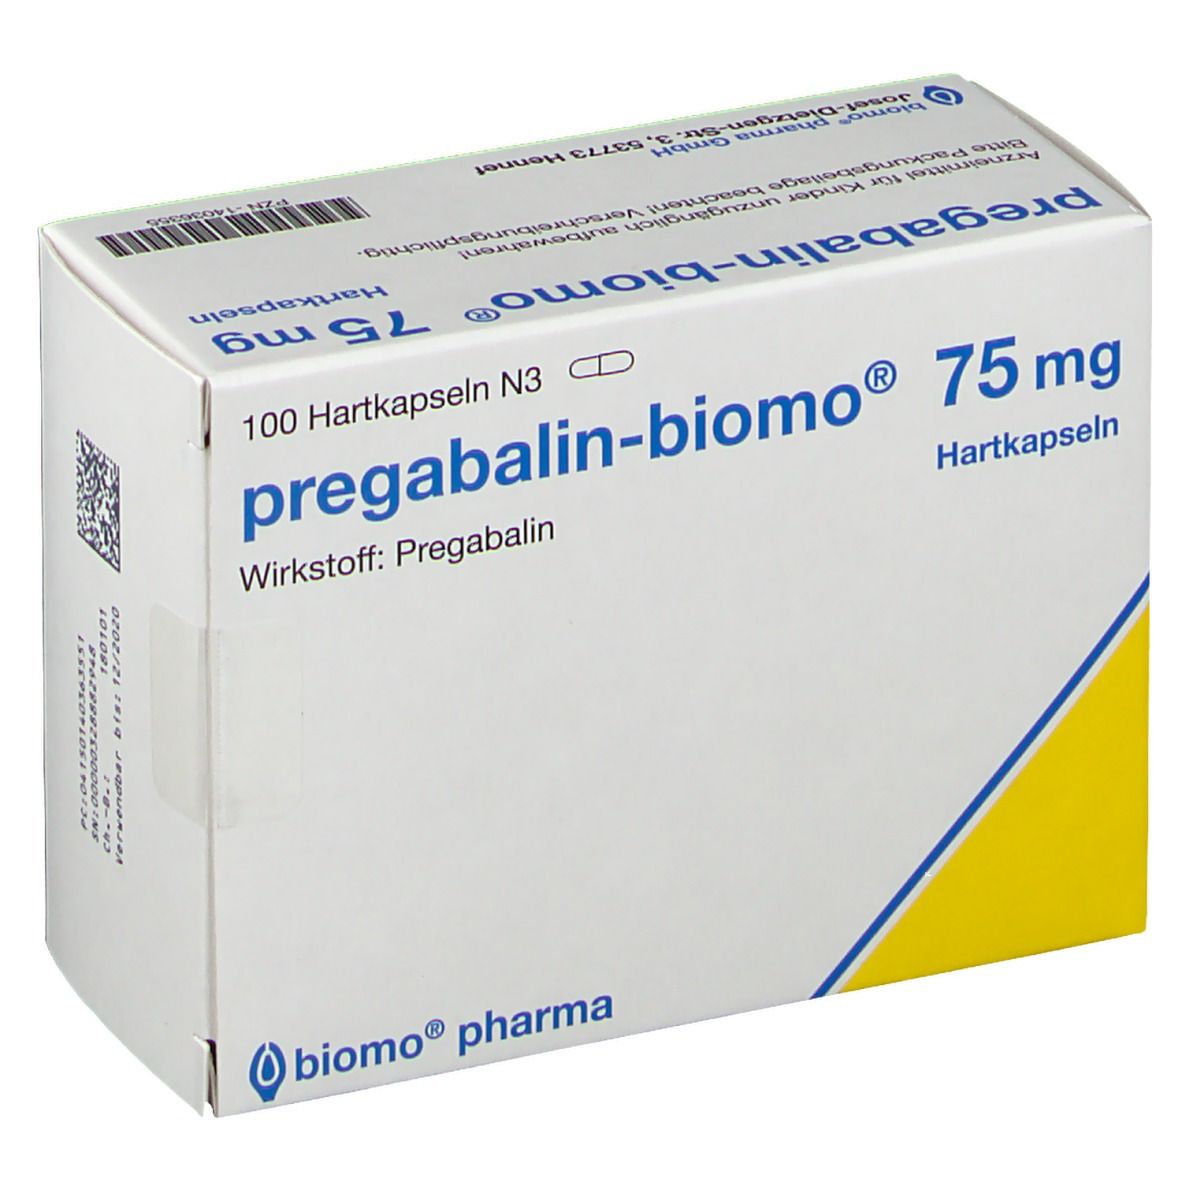 pregabalin-biomo® 75 mg